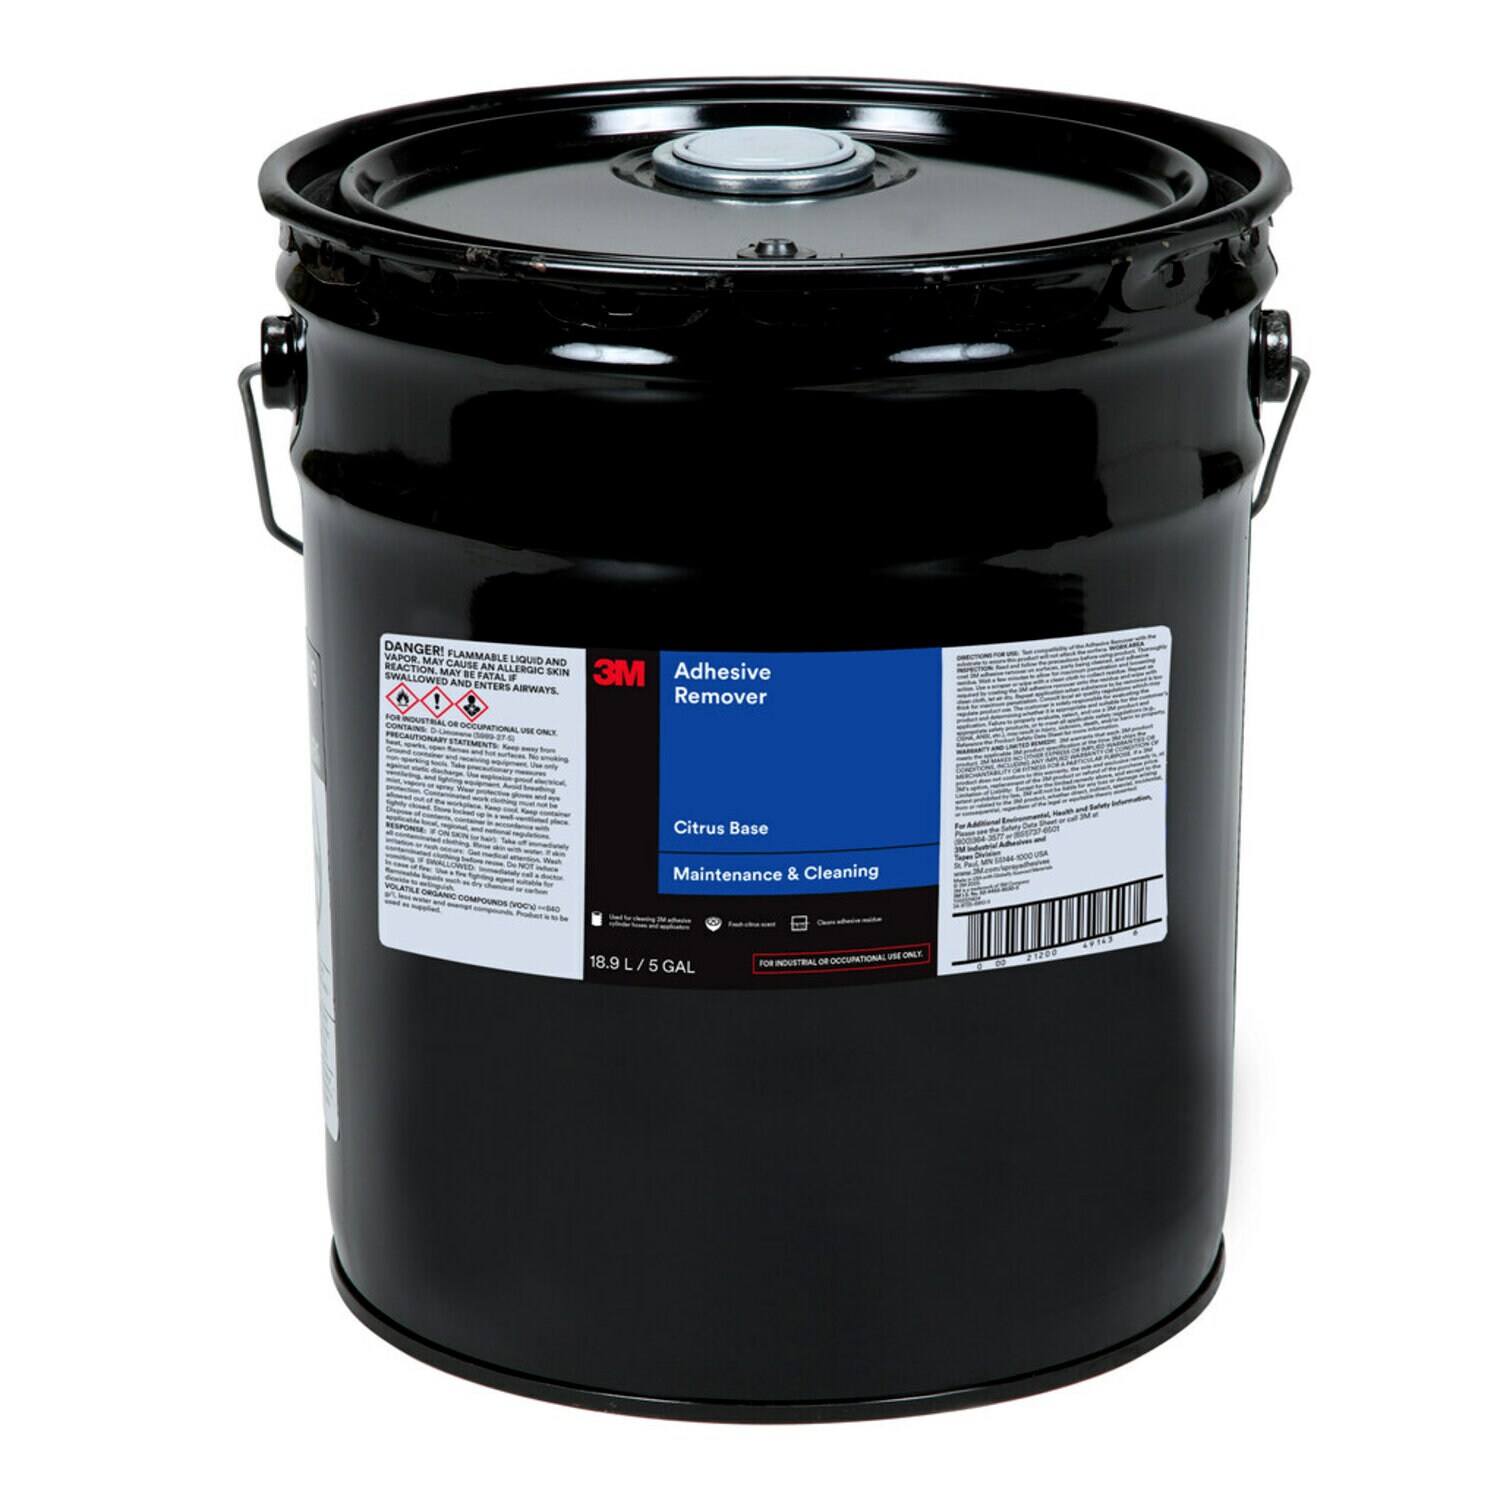 7000121404 - 3M Adhesive Remover, 5 Gallon Drum (Pail)